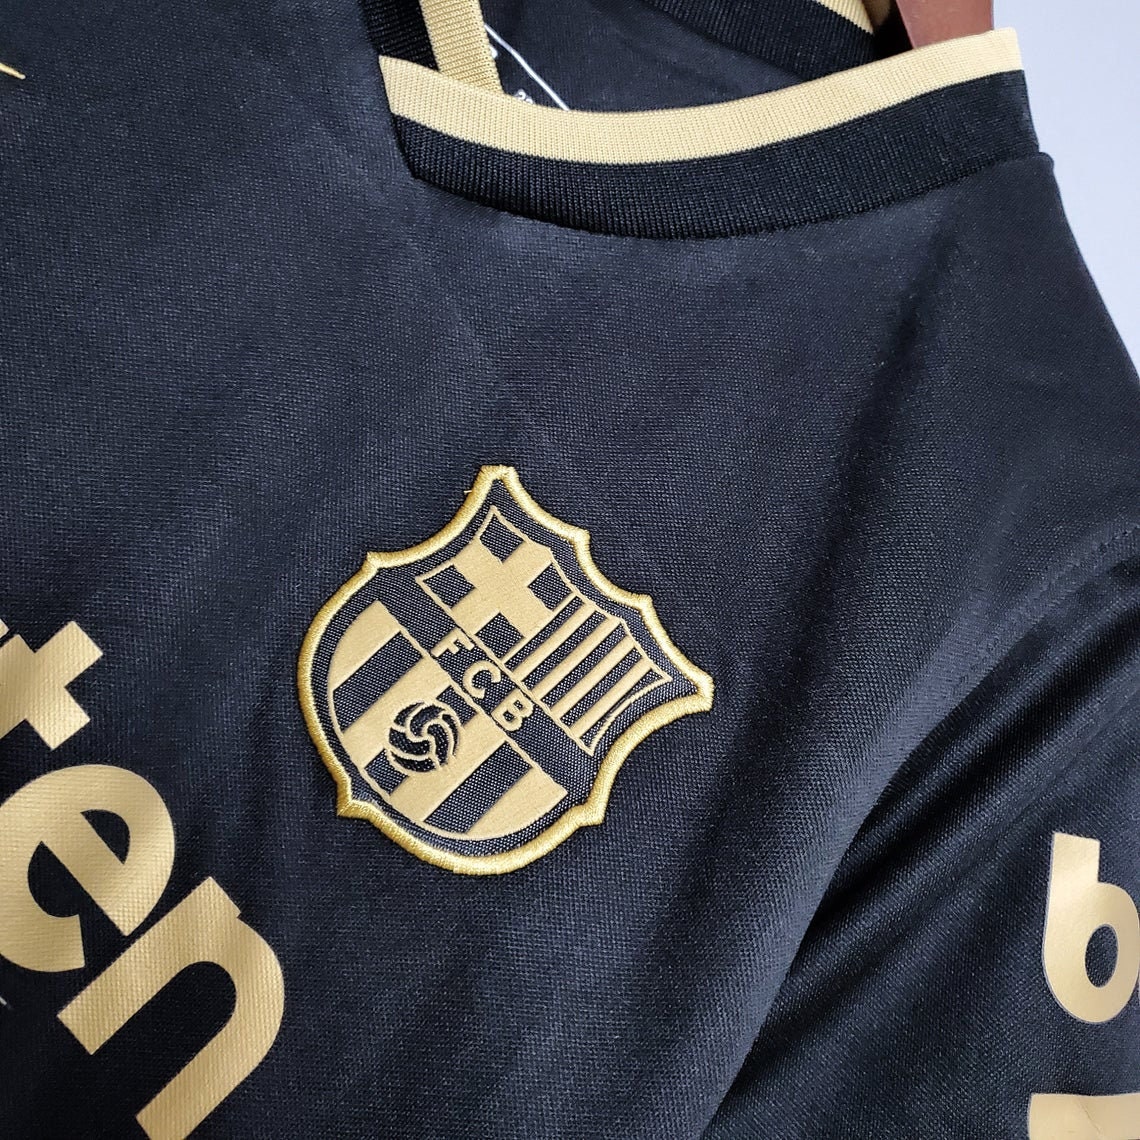 FC BARCELONA Kids Shirt 2020-21 Soccer Jersey Shirt Football | Etsy